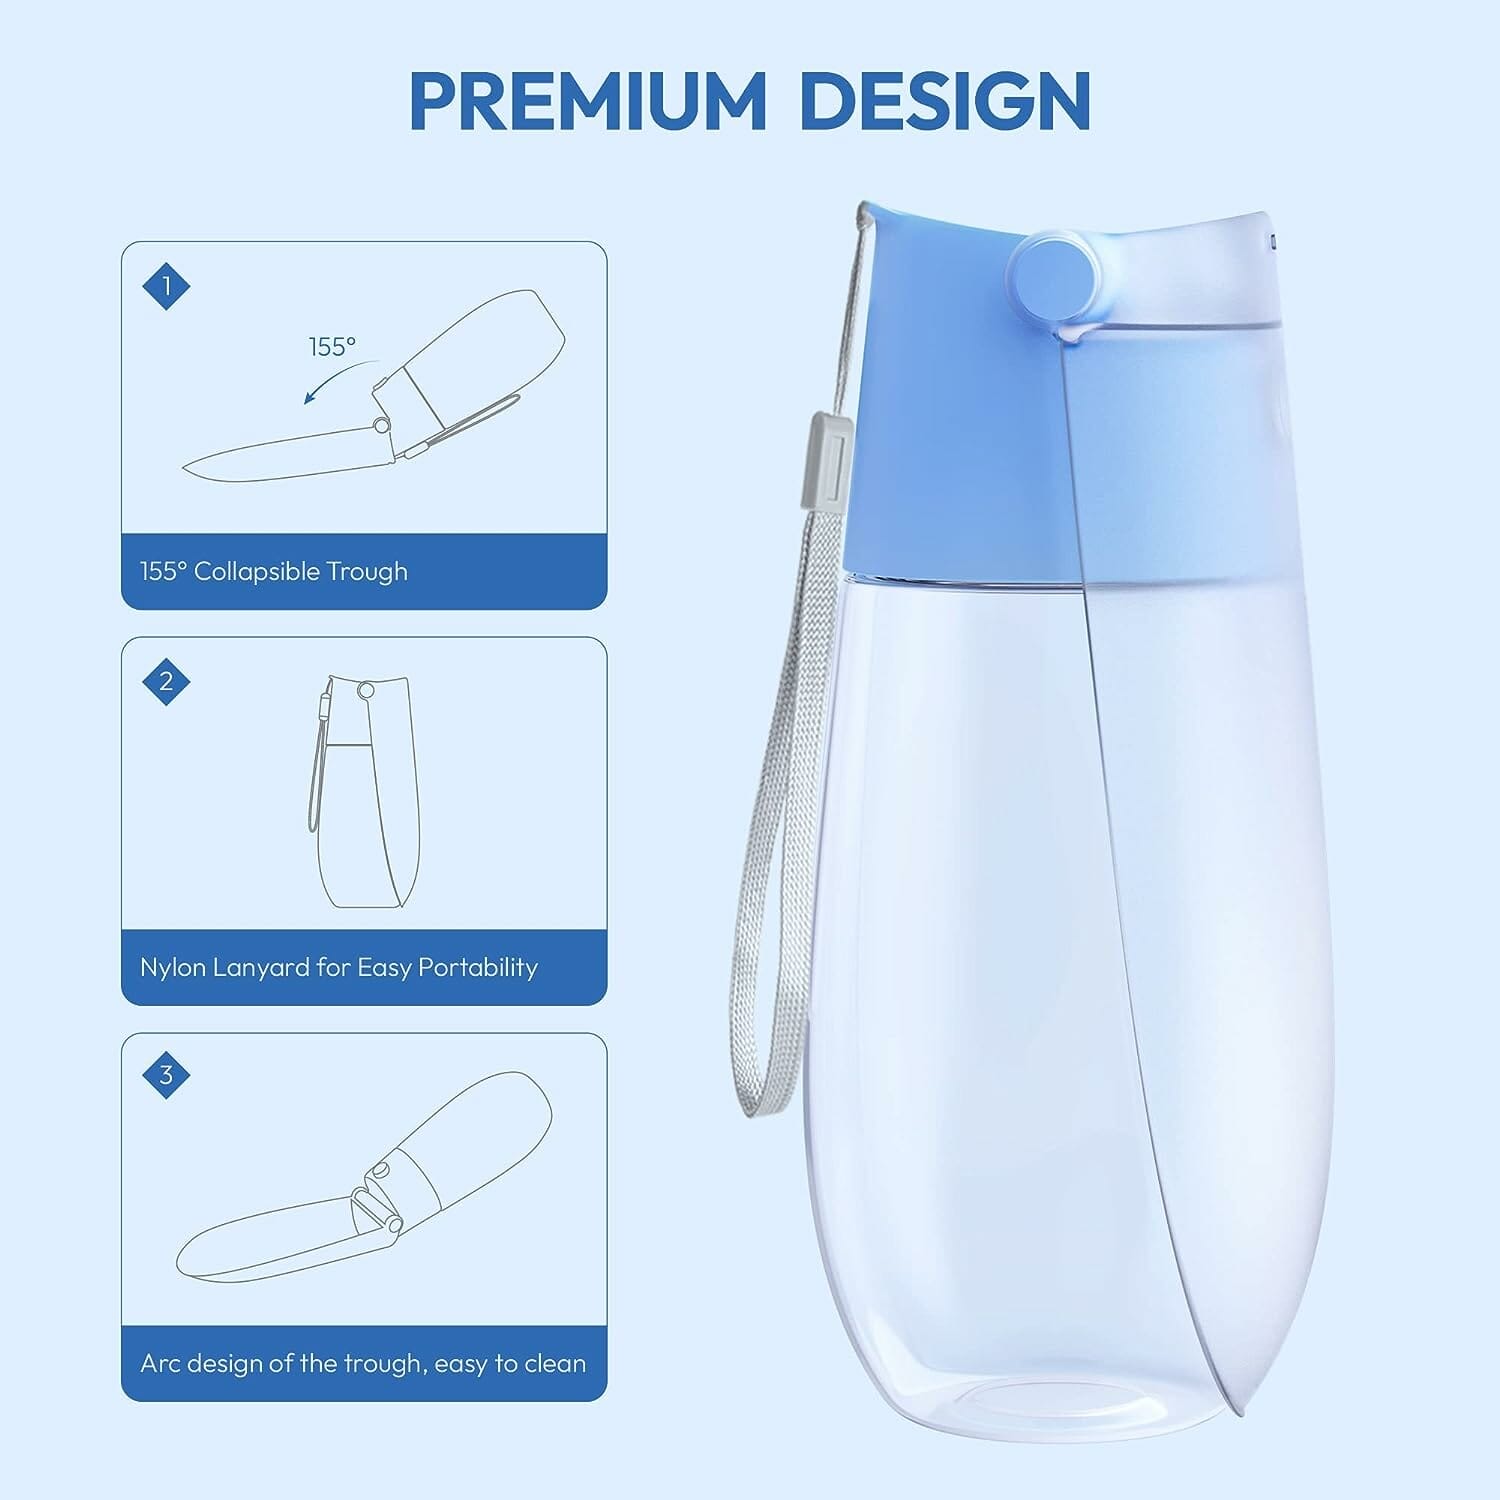 Velmata Portable Dog Water Bottle Review